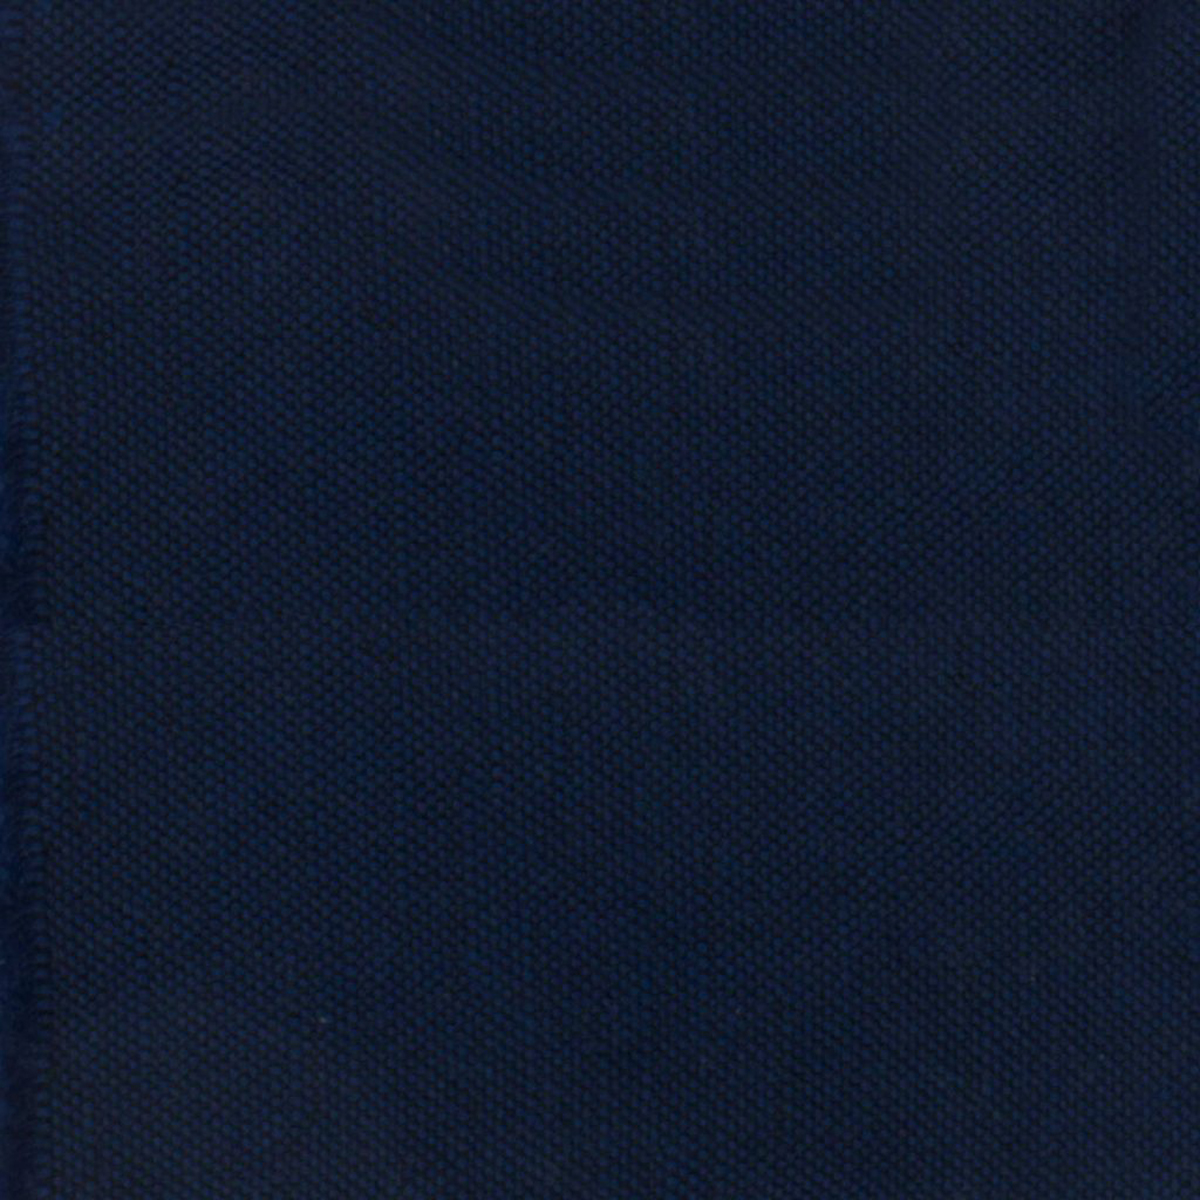 linen indigo cushion for charleston teak arm chair product image